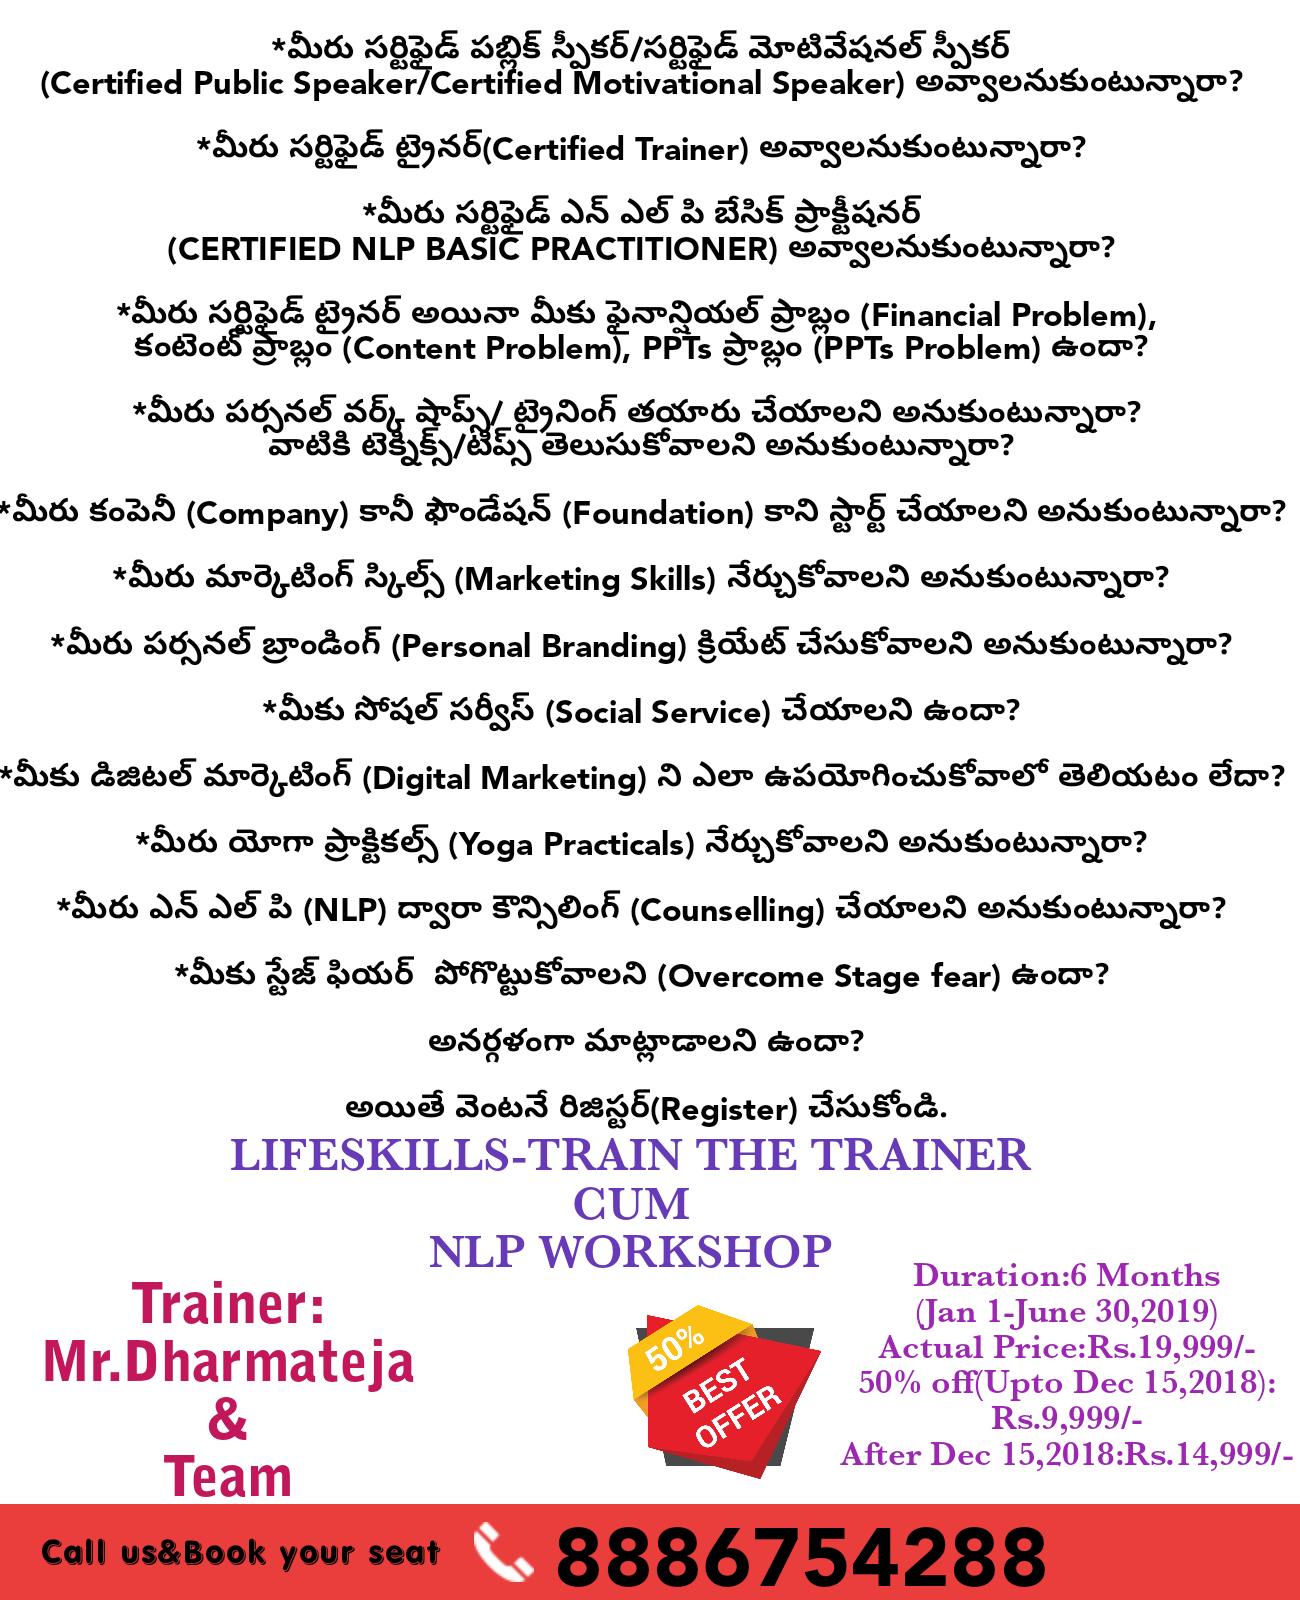 Lifeskills-Train the trainer cum NLP Workshop 8886754288, Hyderabad, Telangana, India